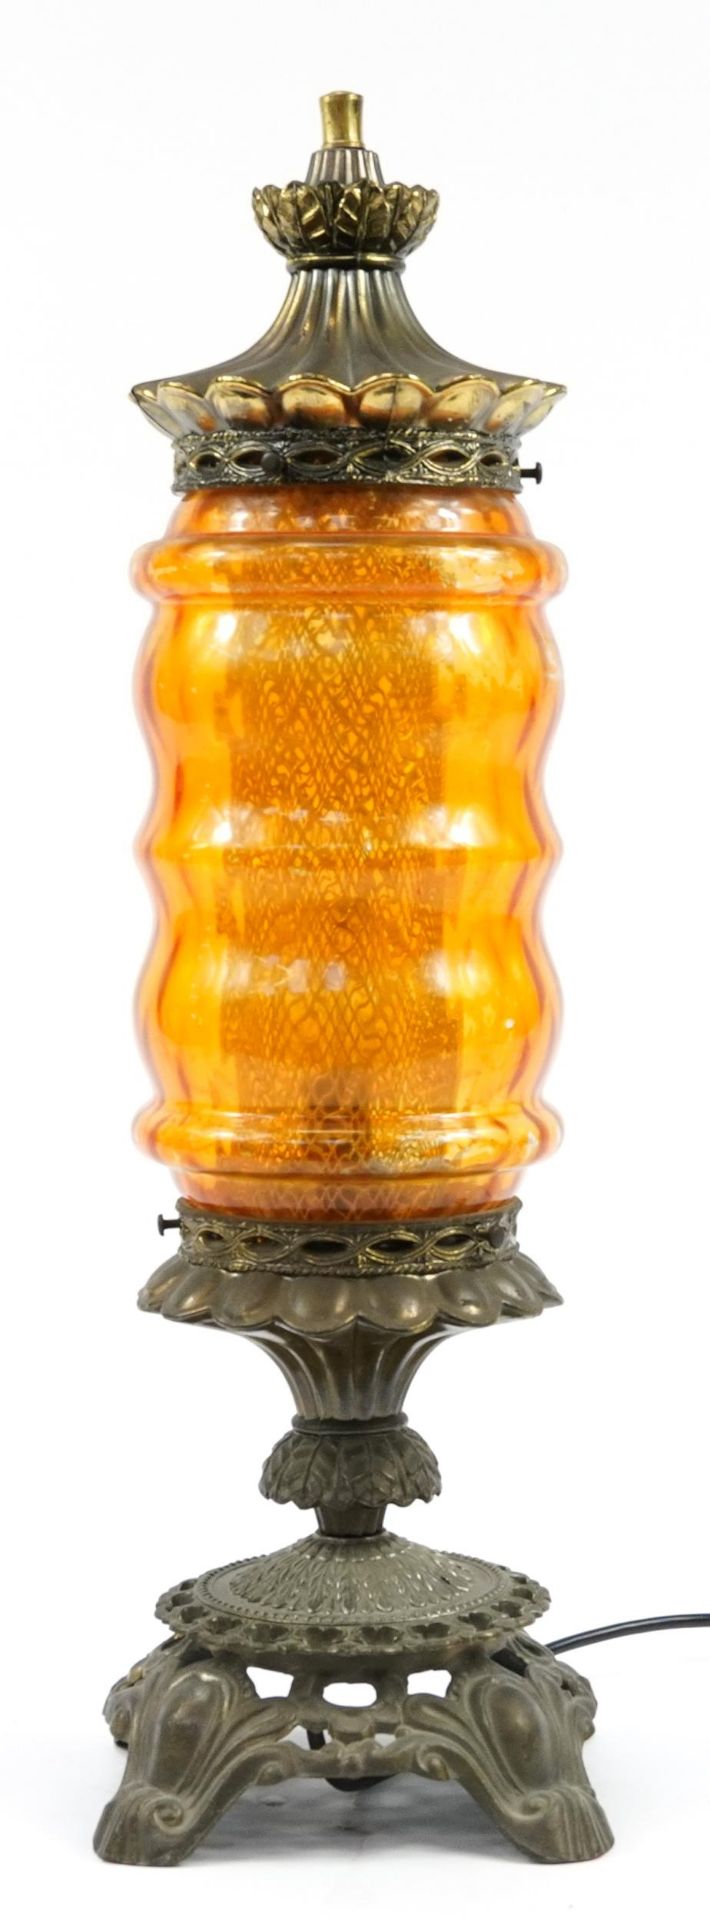 Ornate brass and orange coloured glass lamp, 60.5cm high